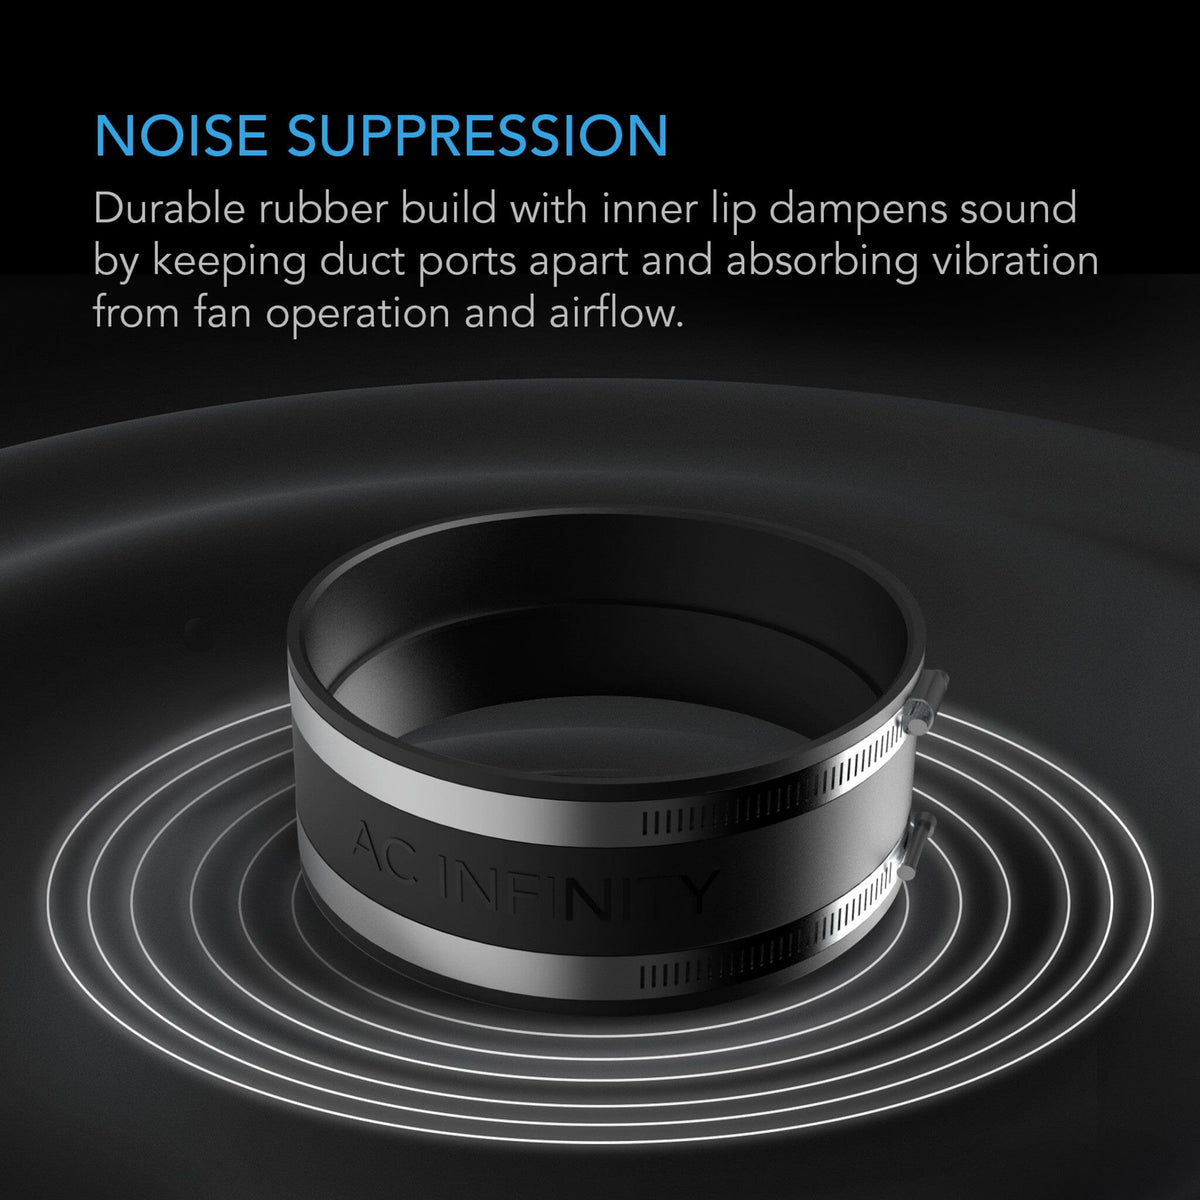 Noise suppression